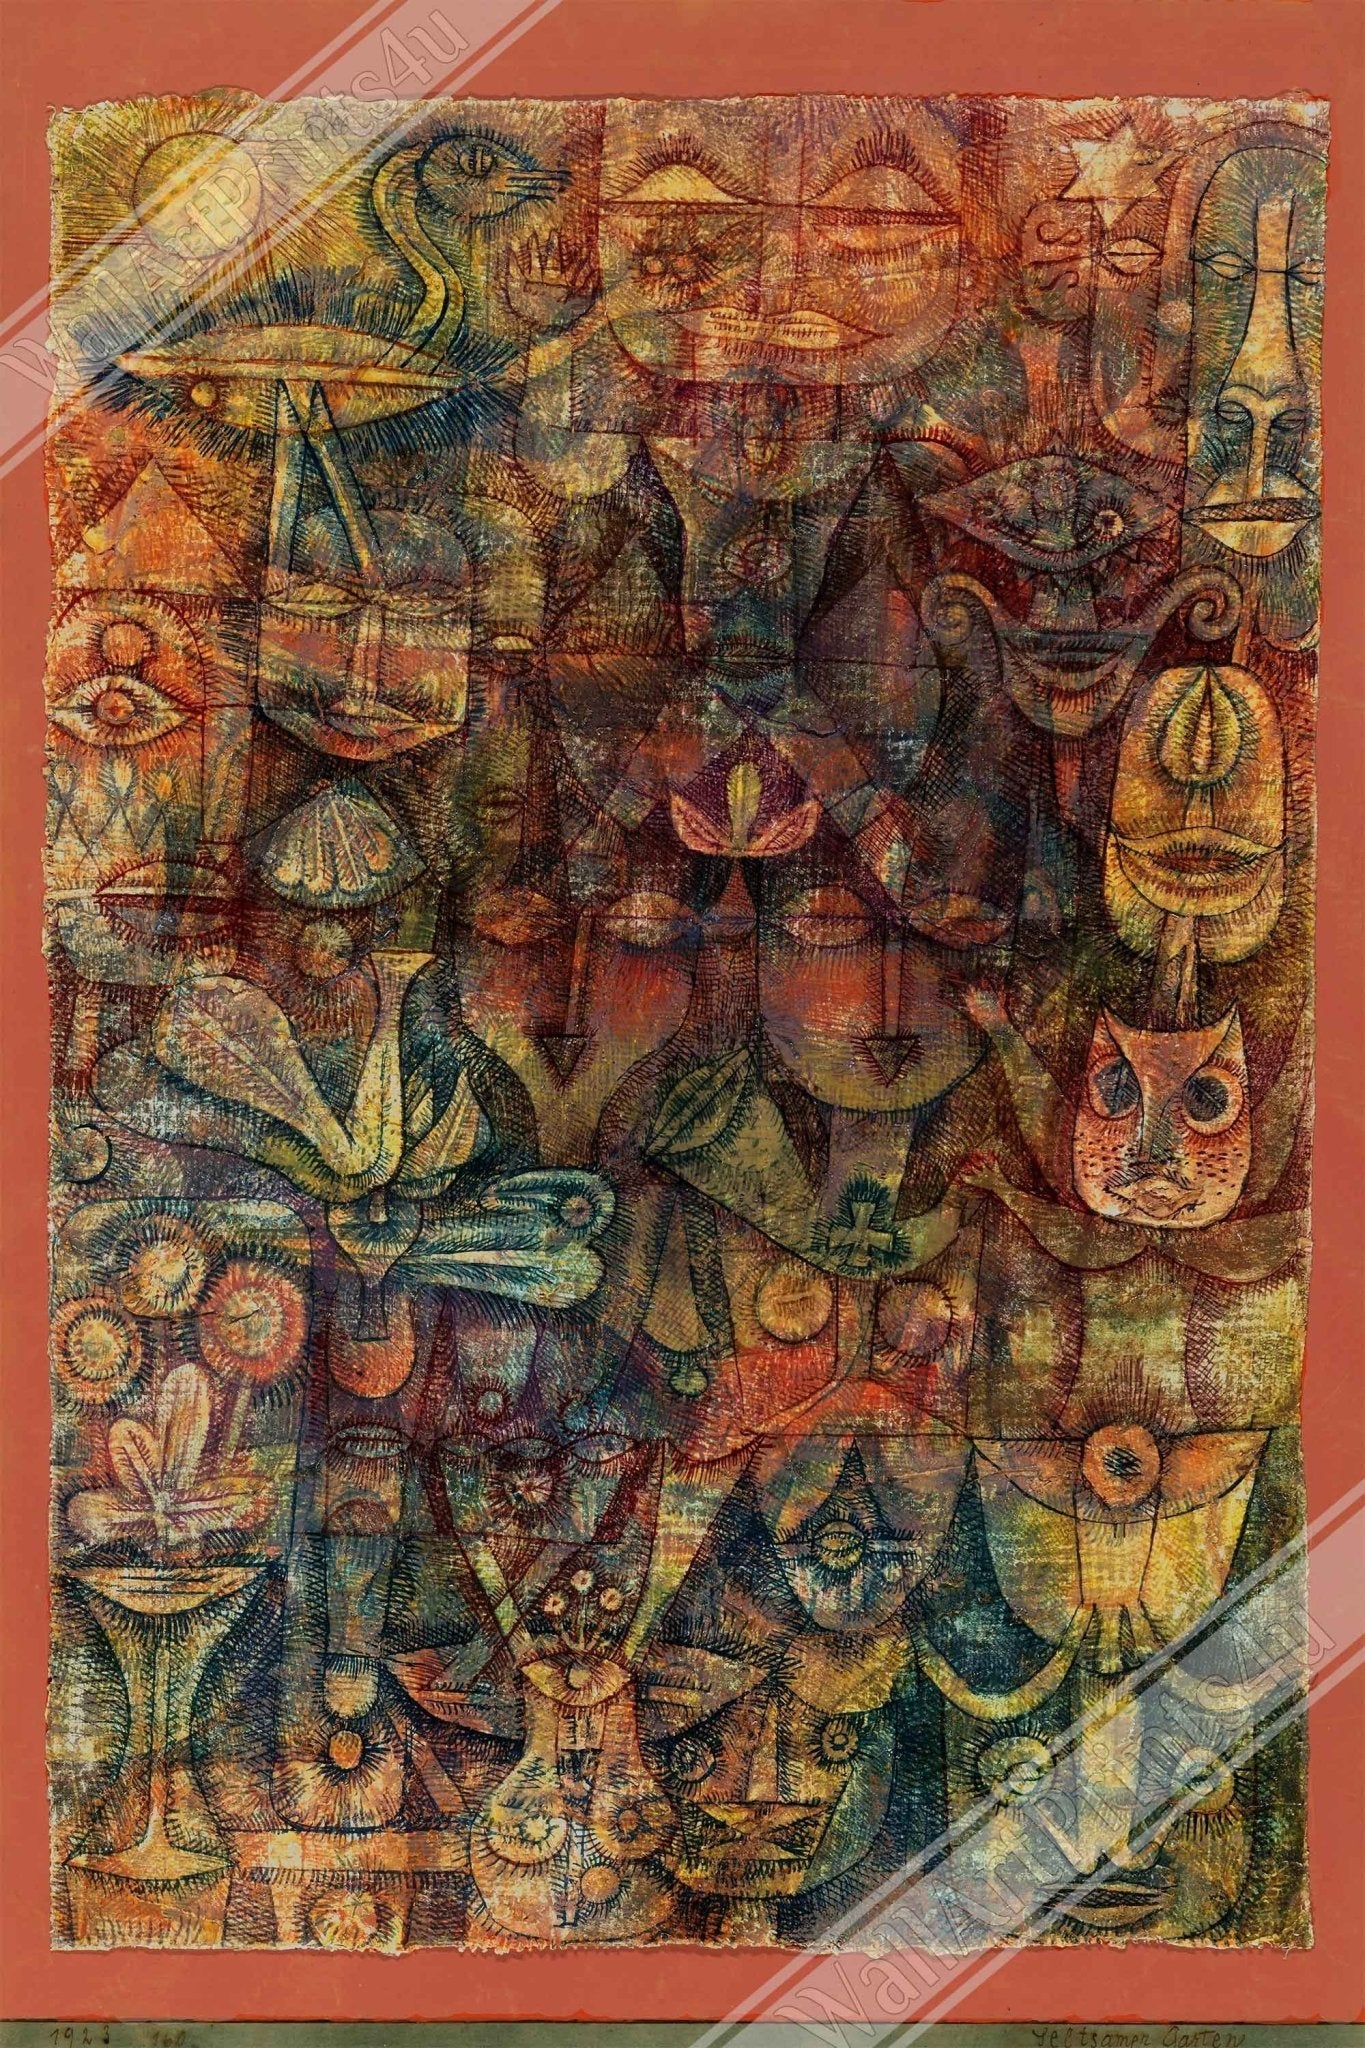 Paul Klee Strange Garden Canvas Print, Abstract Art Canvas, Paul Klee Canvass - WallArtPrints4U